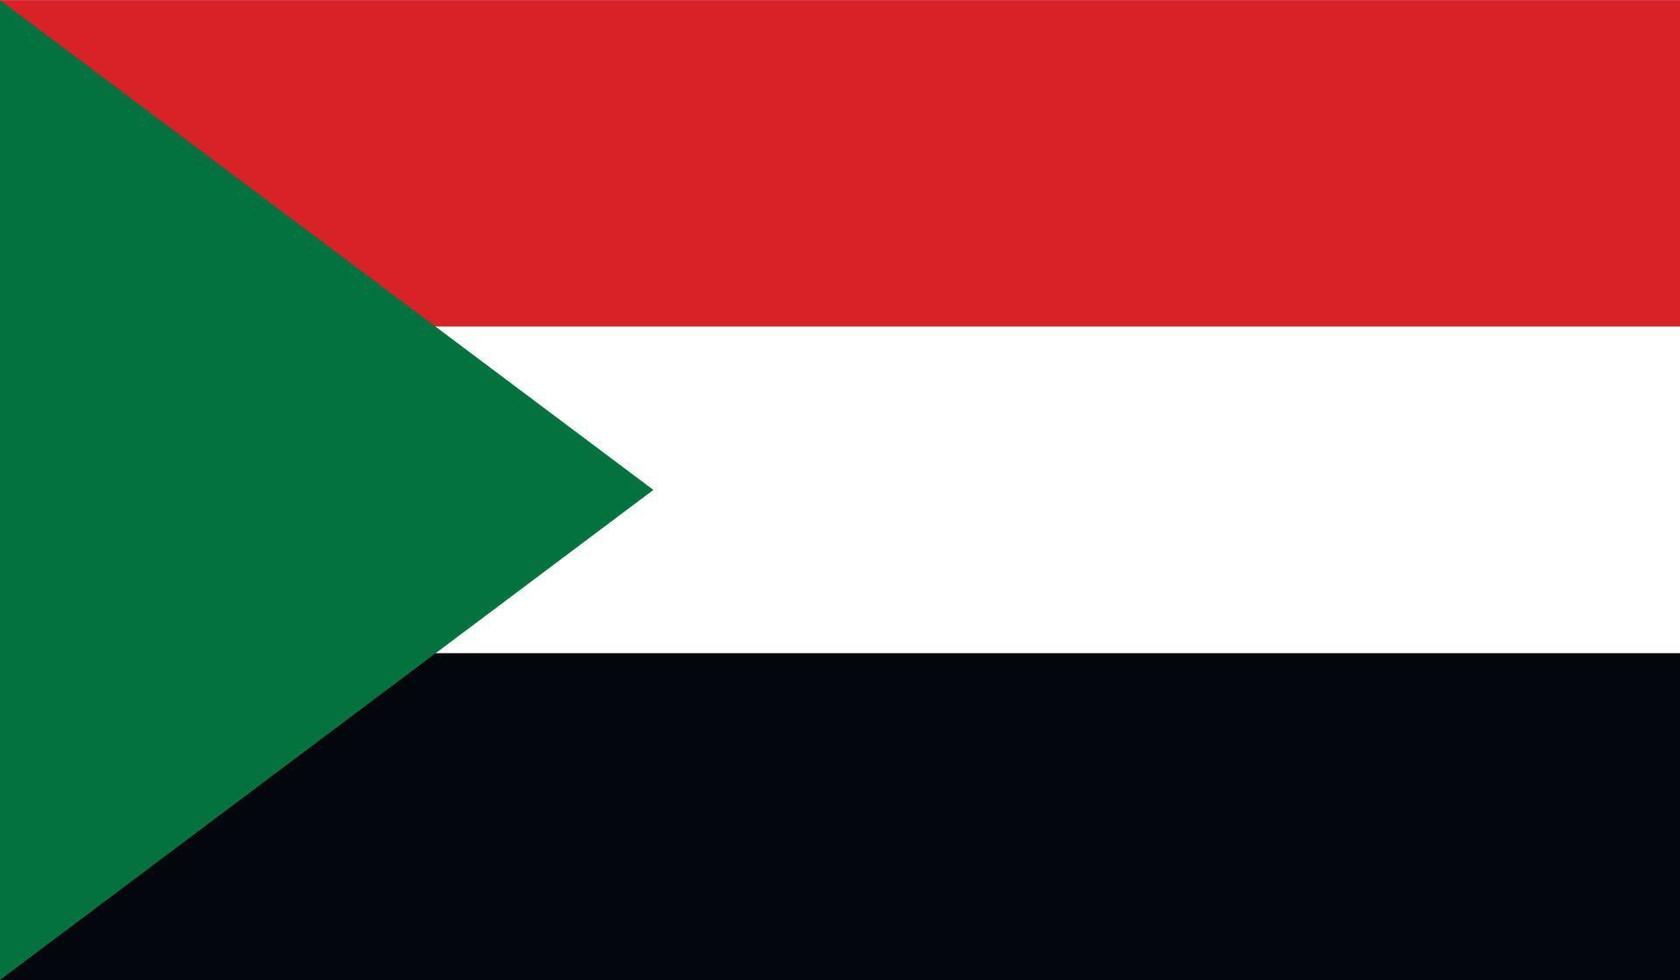 Soedan vlag beeld vector